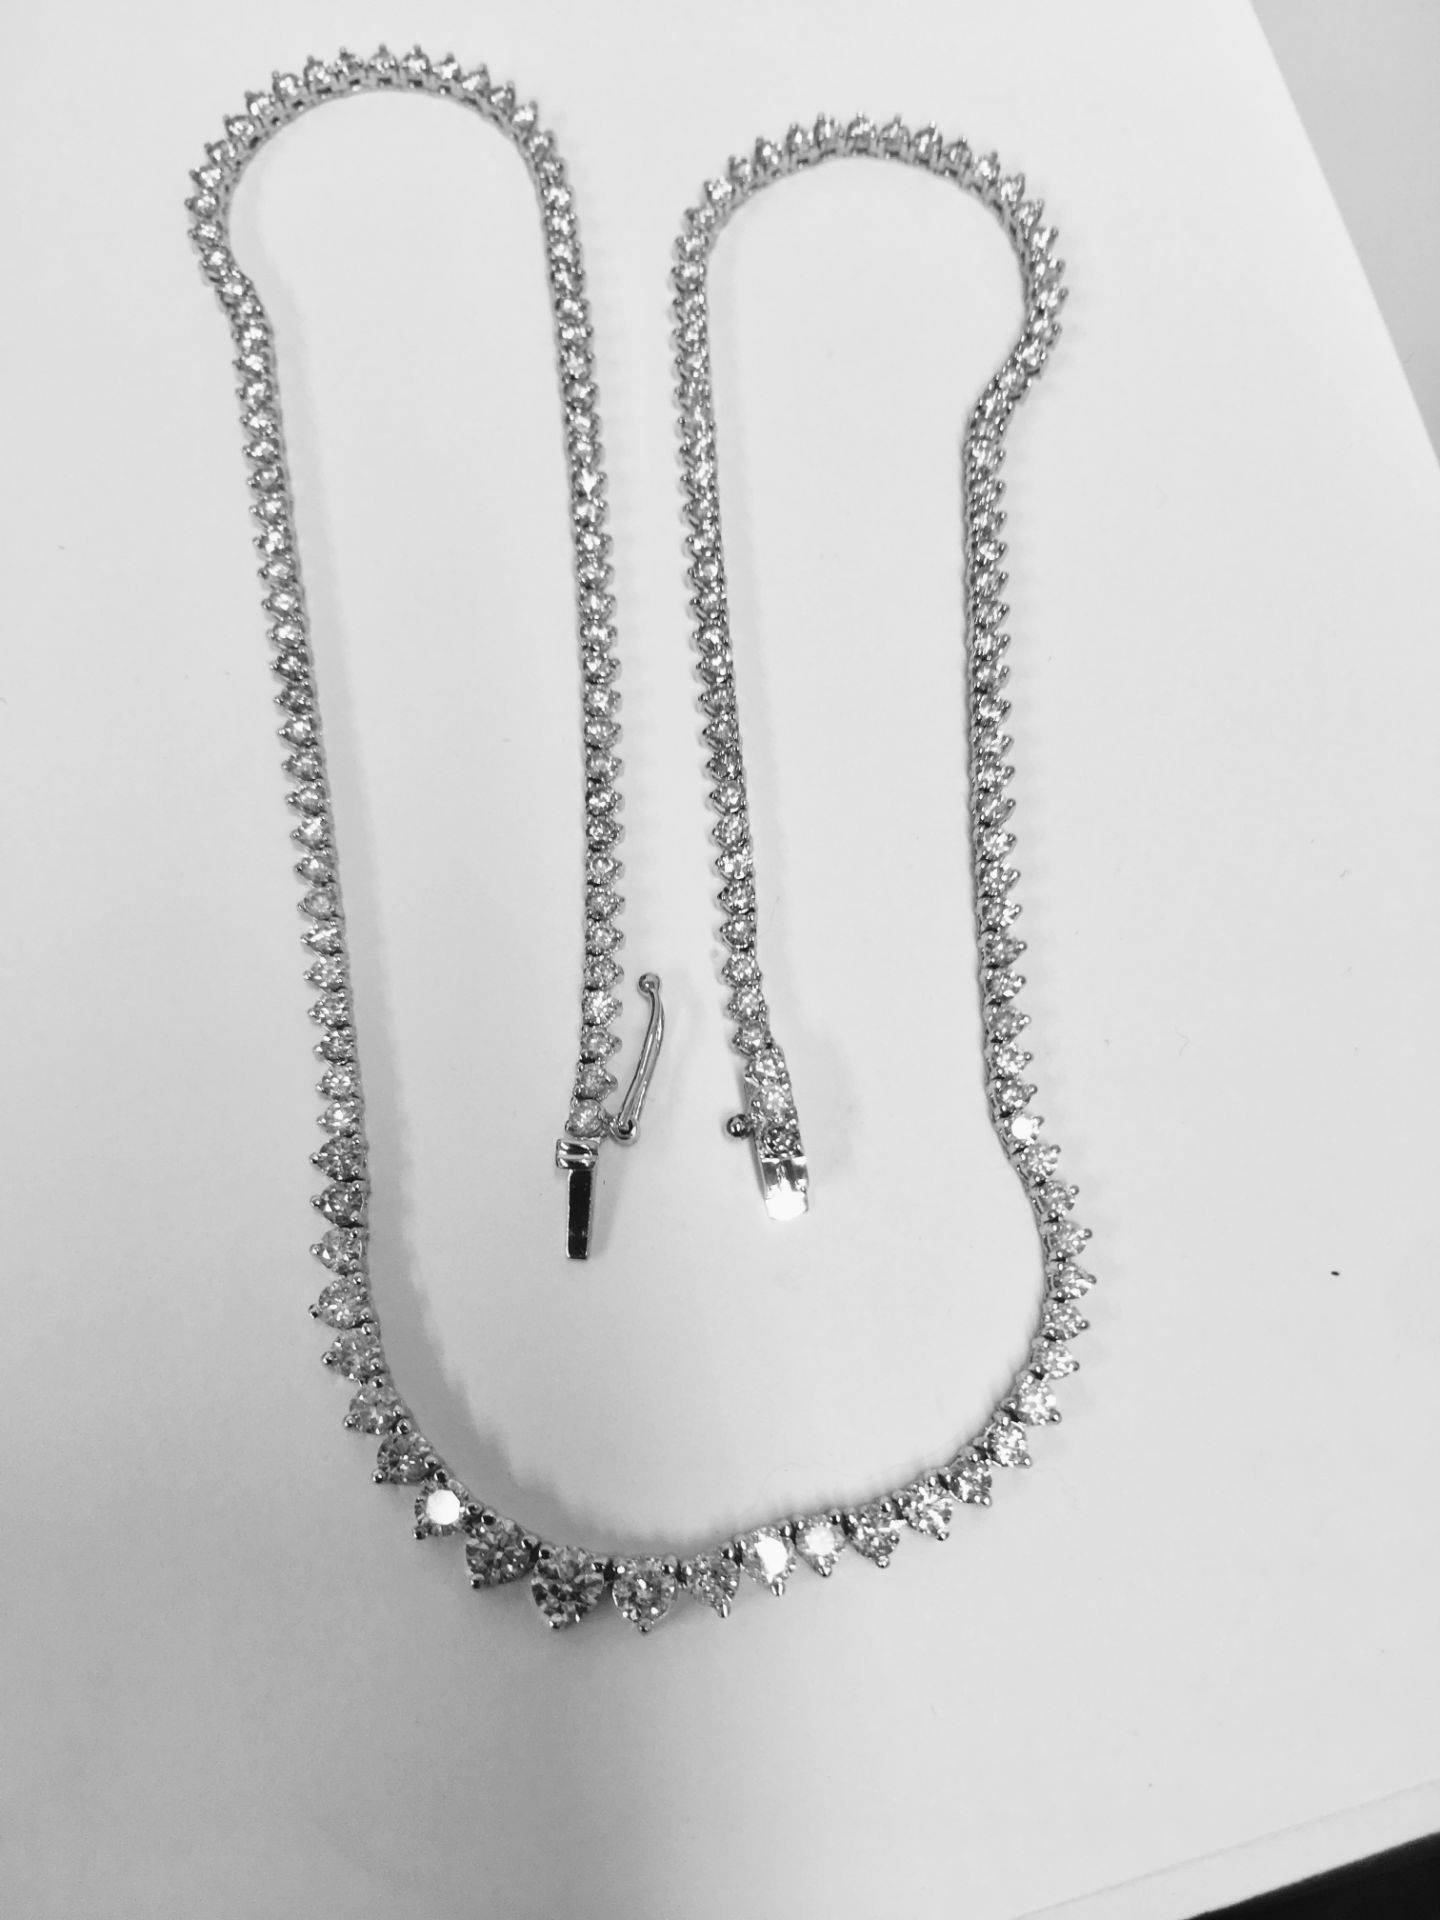 6.50ct Diamond tennis style Necklace - Image 6 of 6